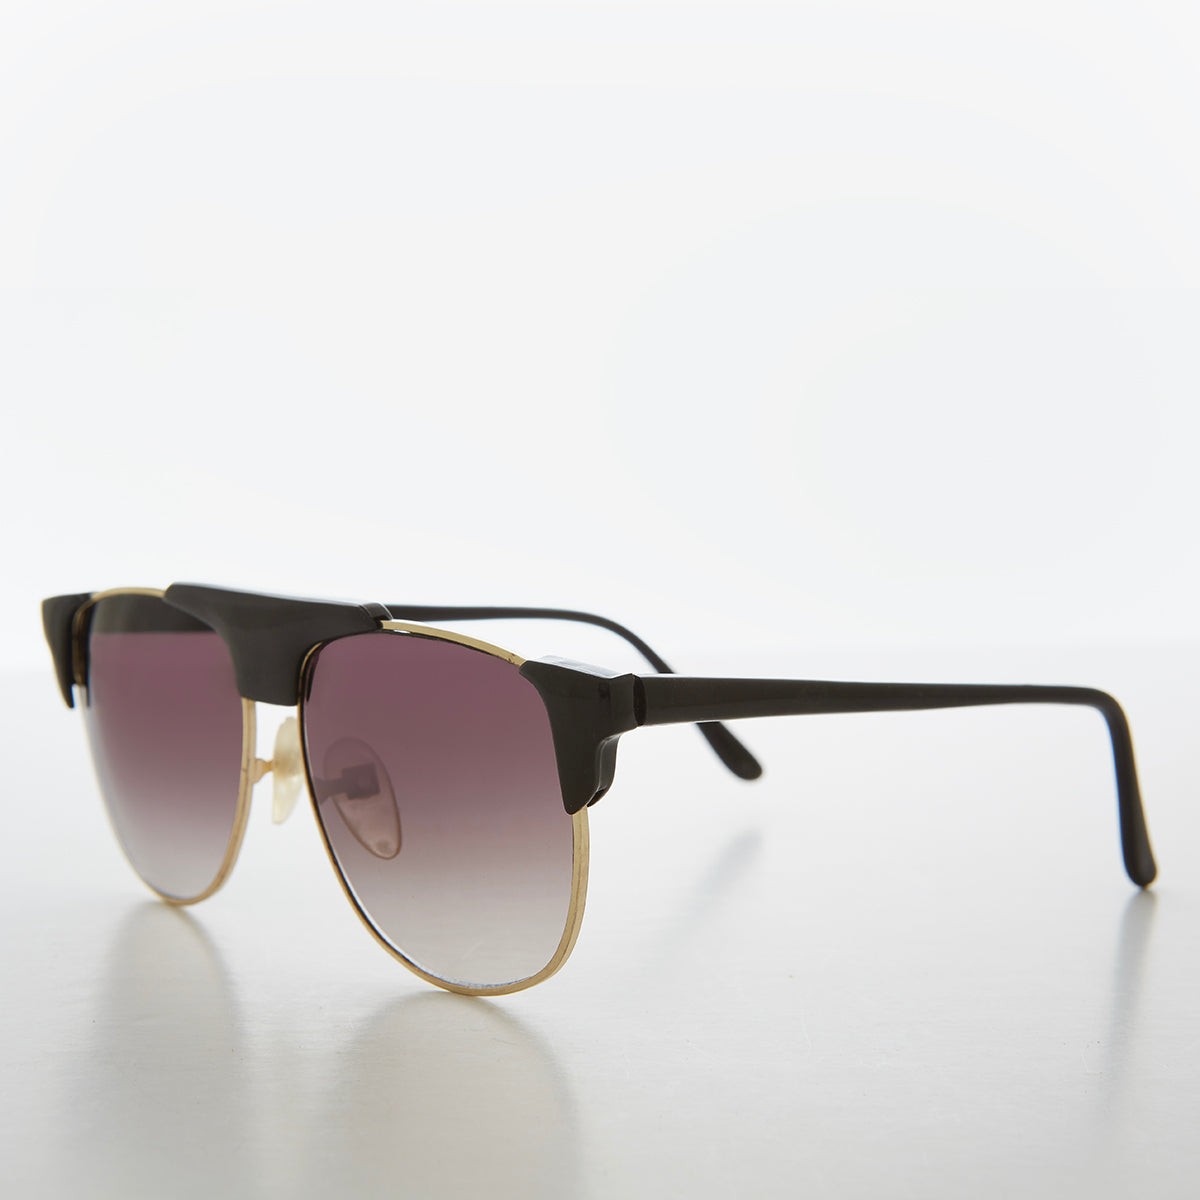 Square Unisex 80s Vintage Sunglasses